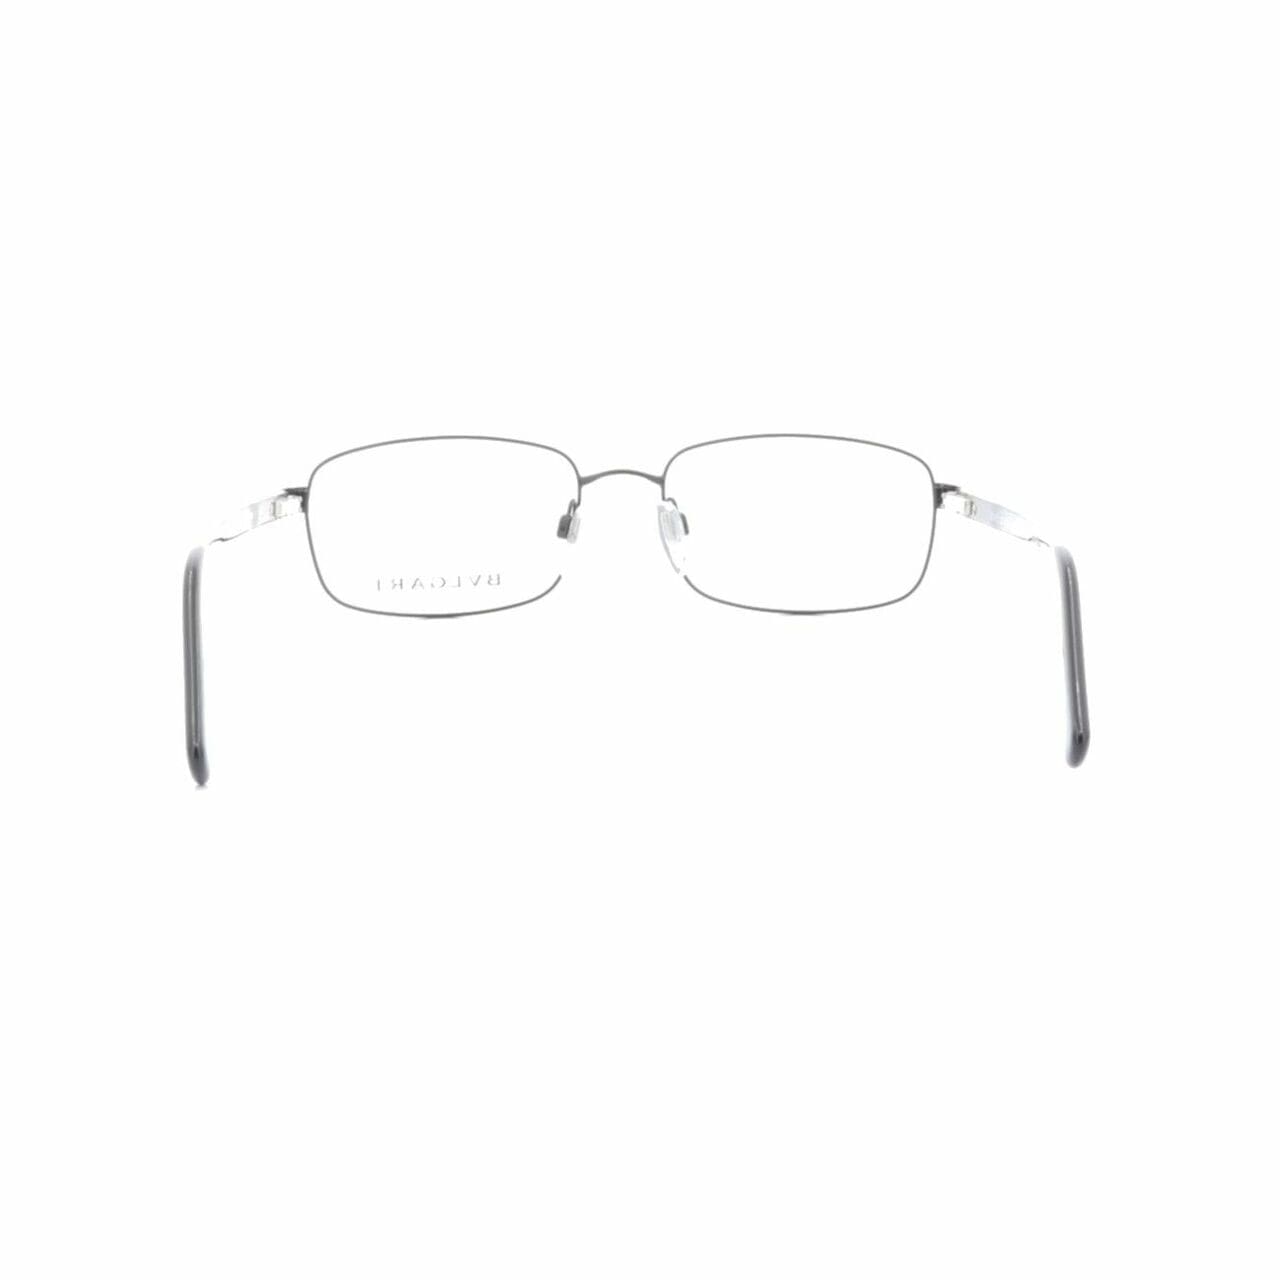 Bvlgari BV178-128 Shiny Black Rectangular Unisex Metal Eyeglasses